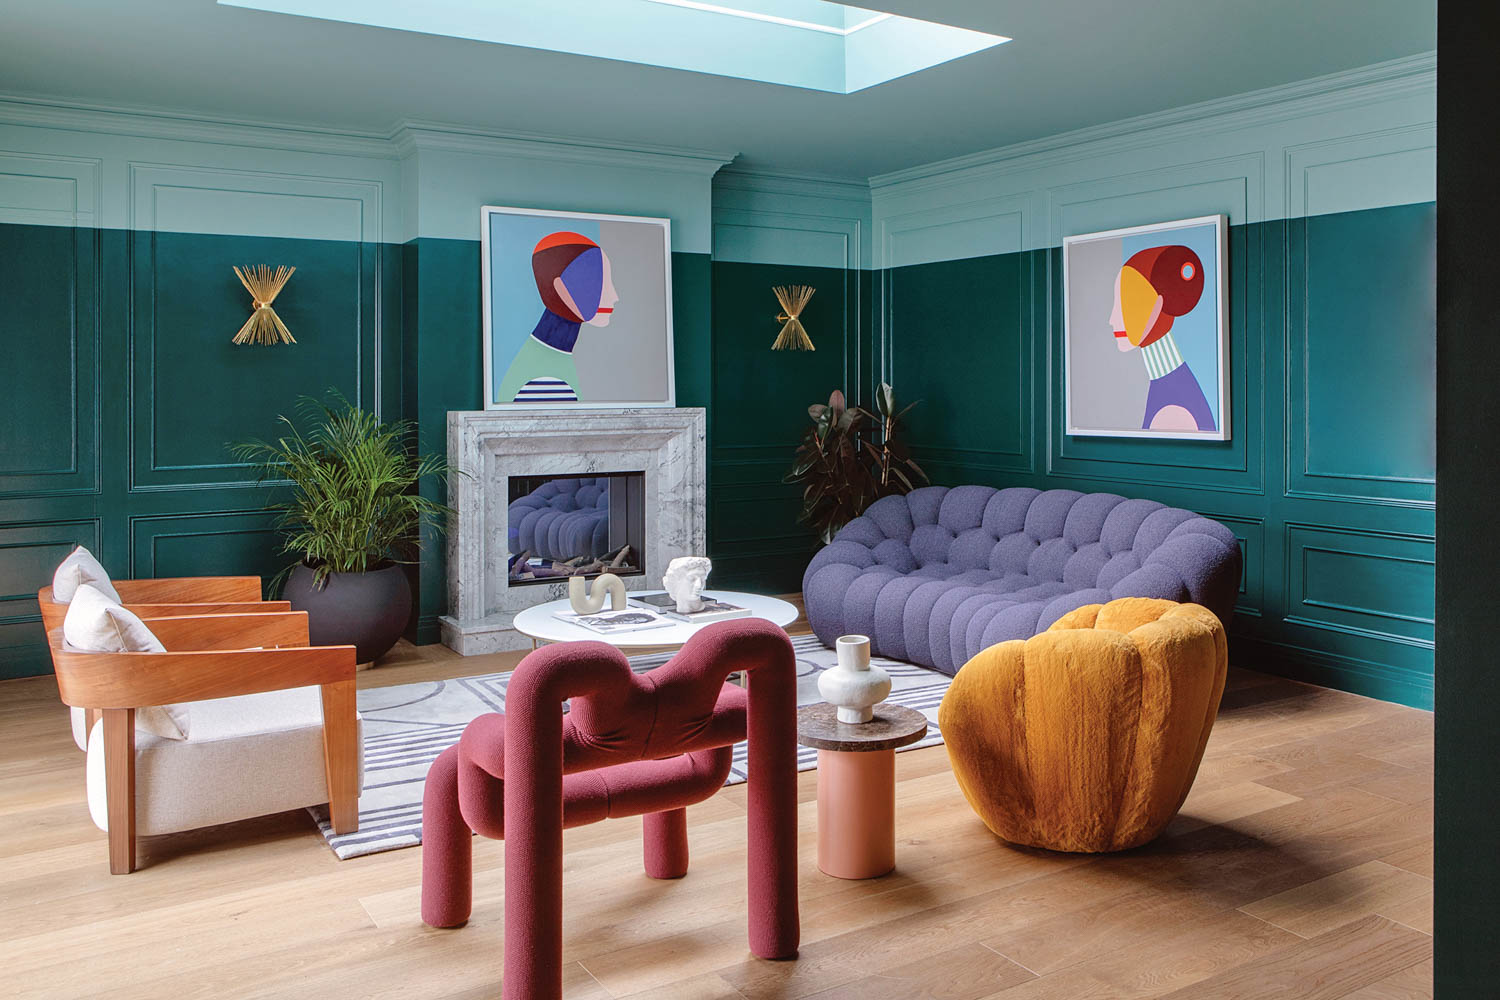 DesignLed Creates a Theatrical Interior for a Dublin Home